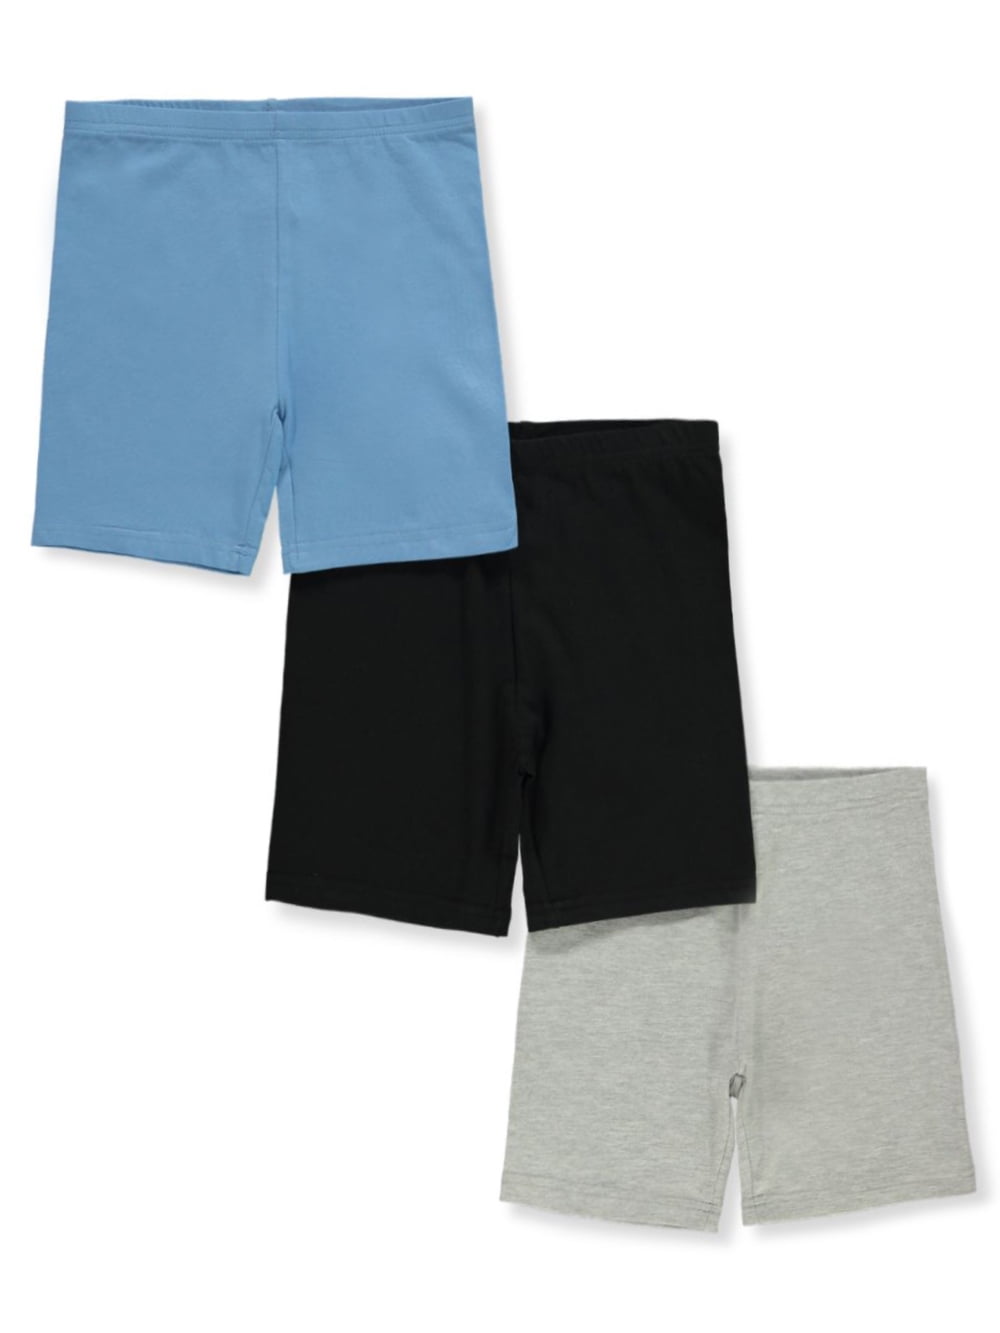 Cookie's Girls' 3-Pack Bike Shorts - black/gray/light blue, 6x (Little ...